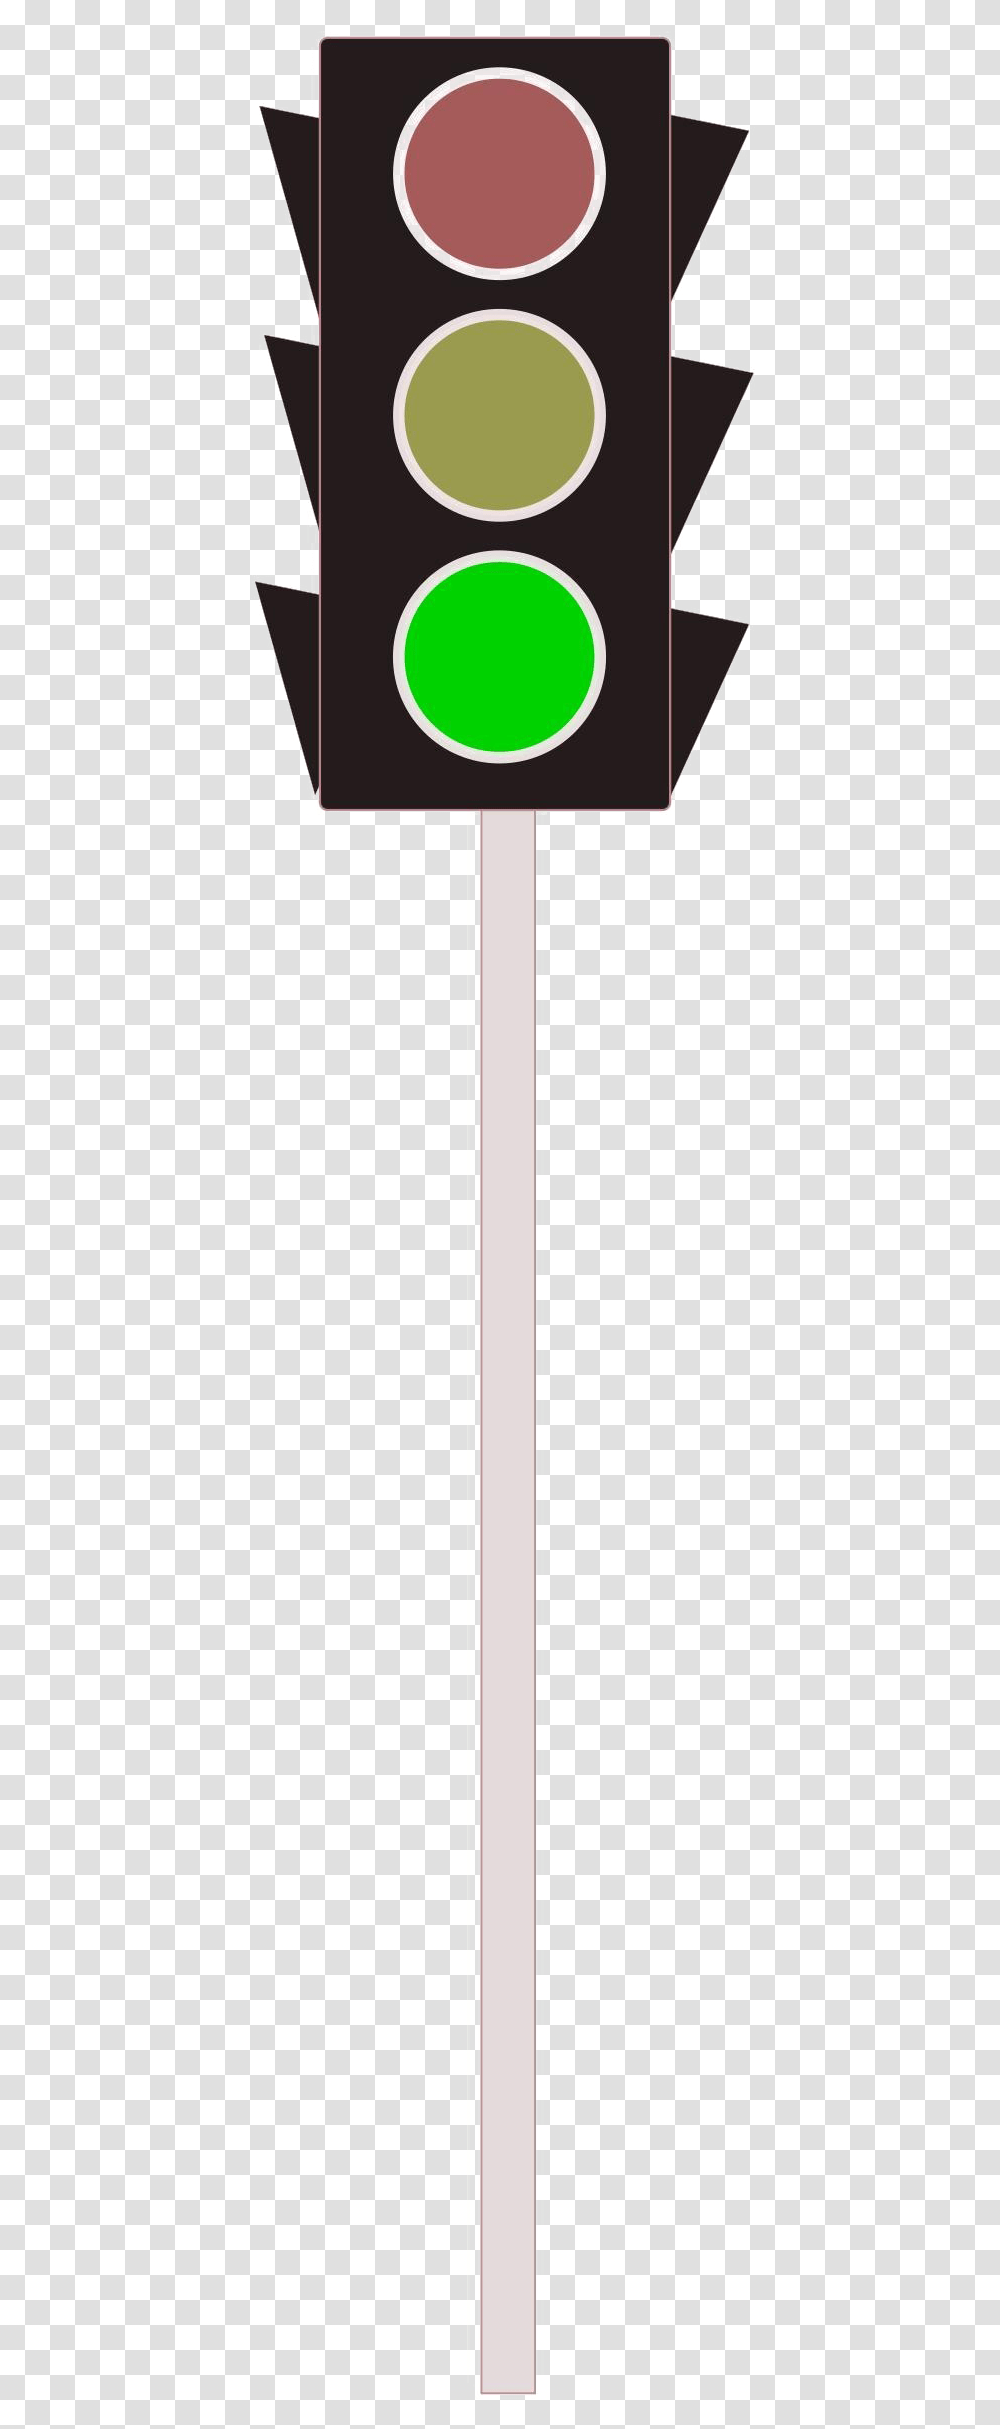 Traffic Light Background Background Traffic Signal, Weapon, Cross, Emblem Transparent Png